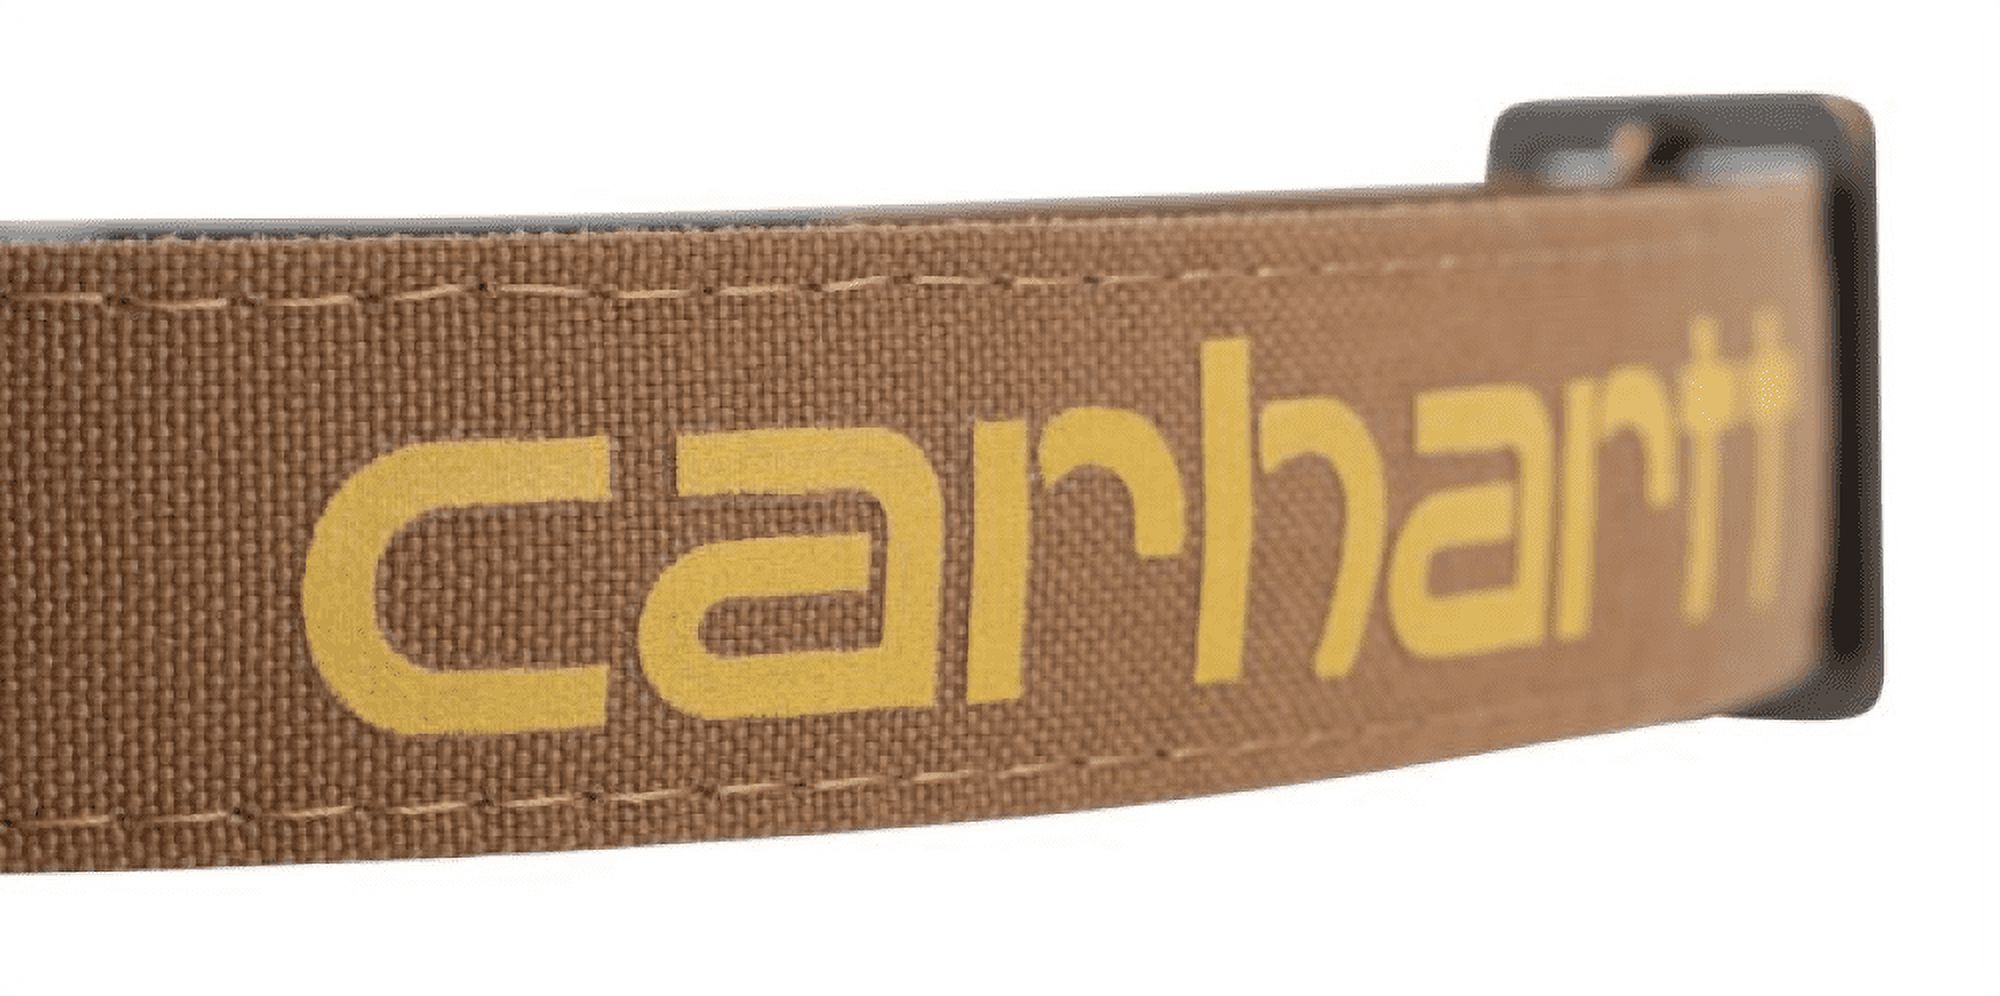 Carhartt Journeyman Dog Collar, Premium Rugged Construction Pet Collar, Carhartt Brown, Large - image 4 of 5